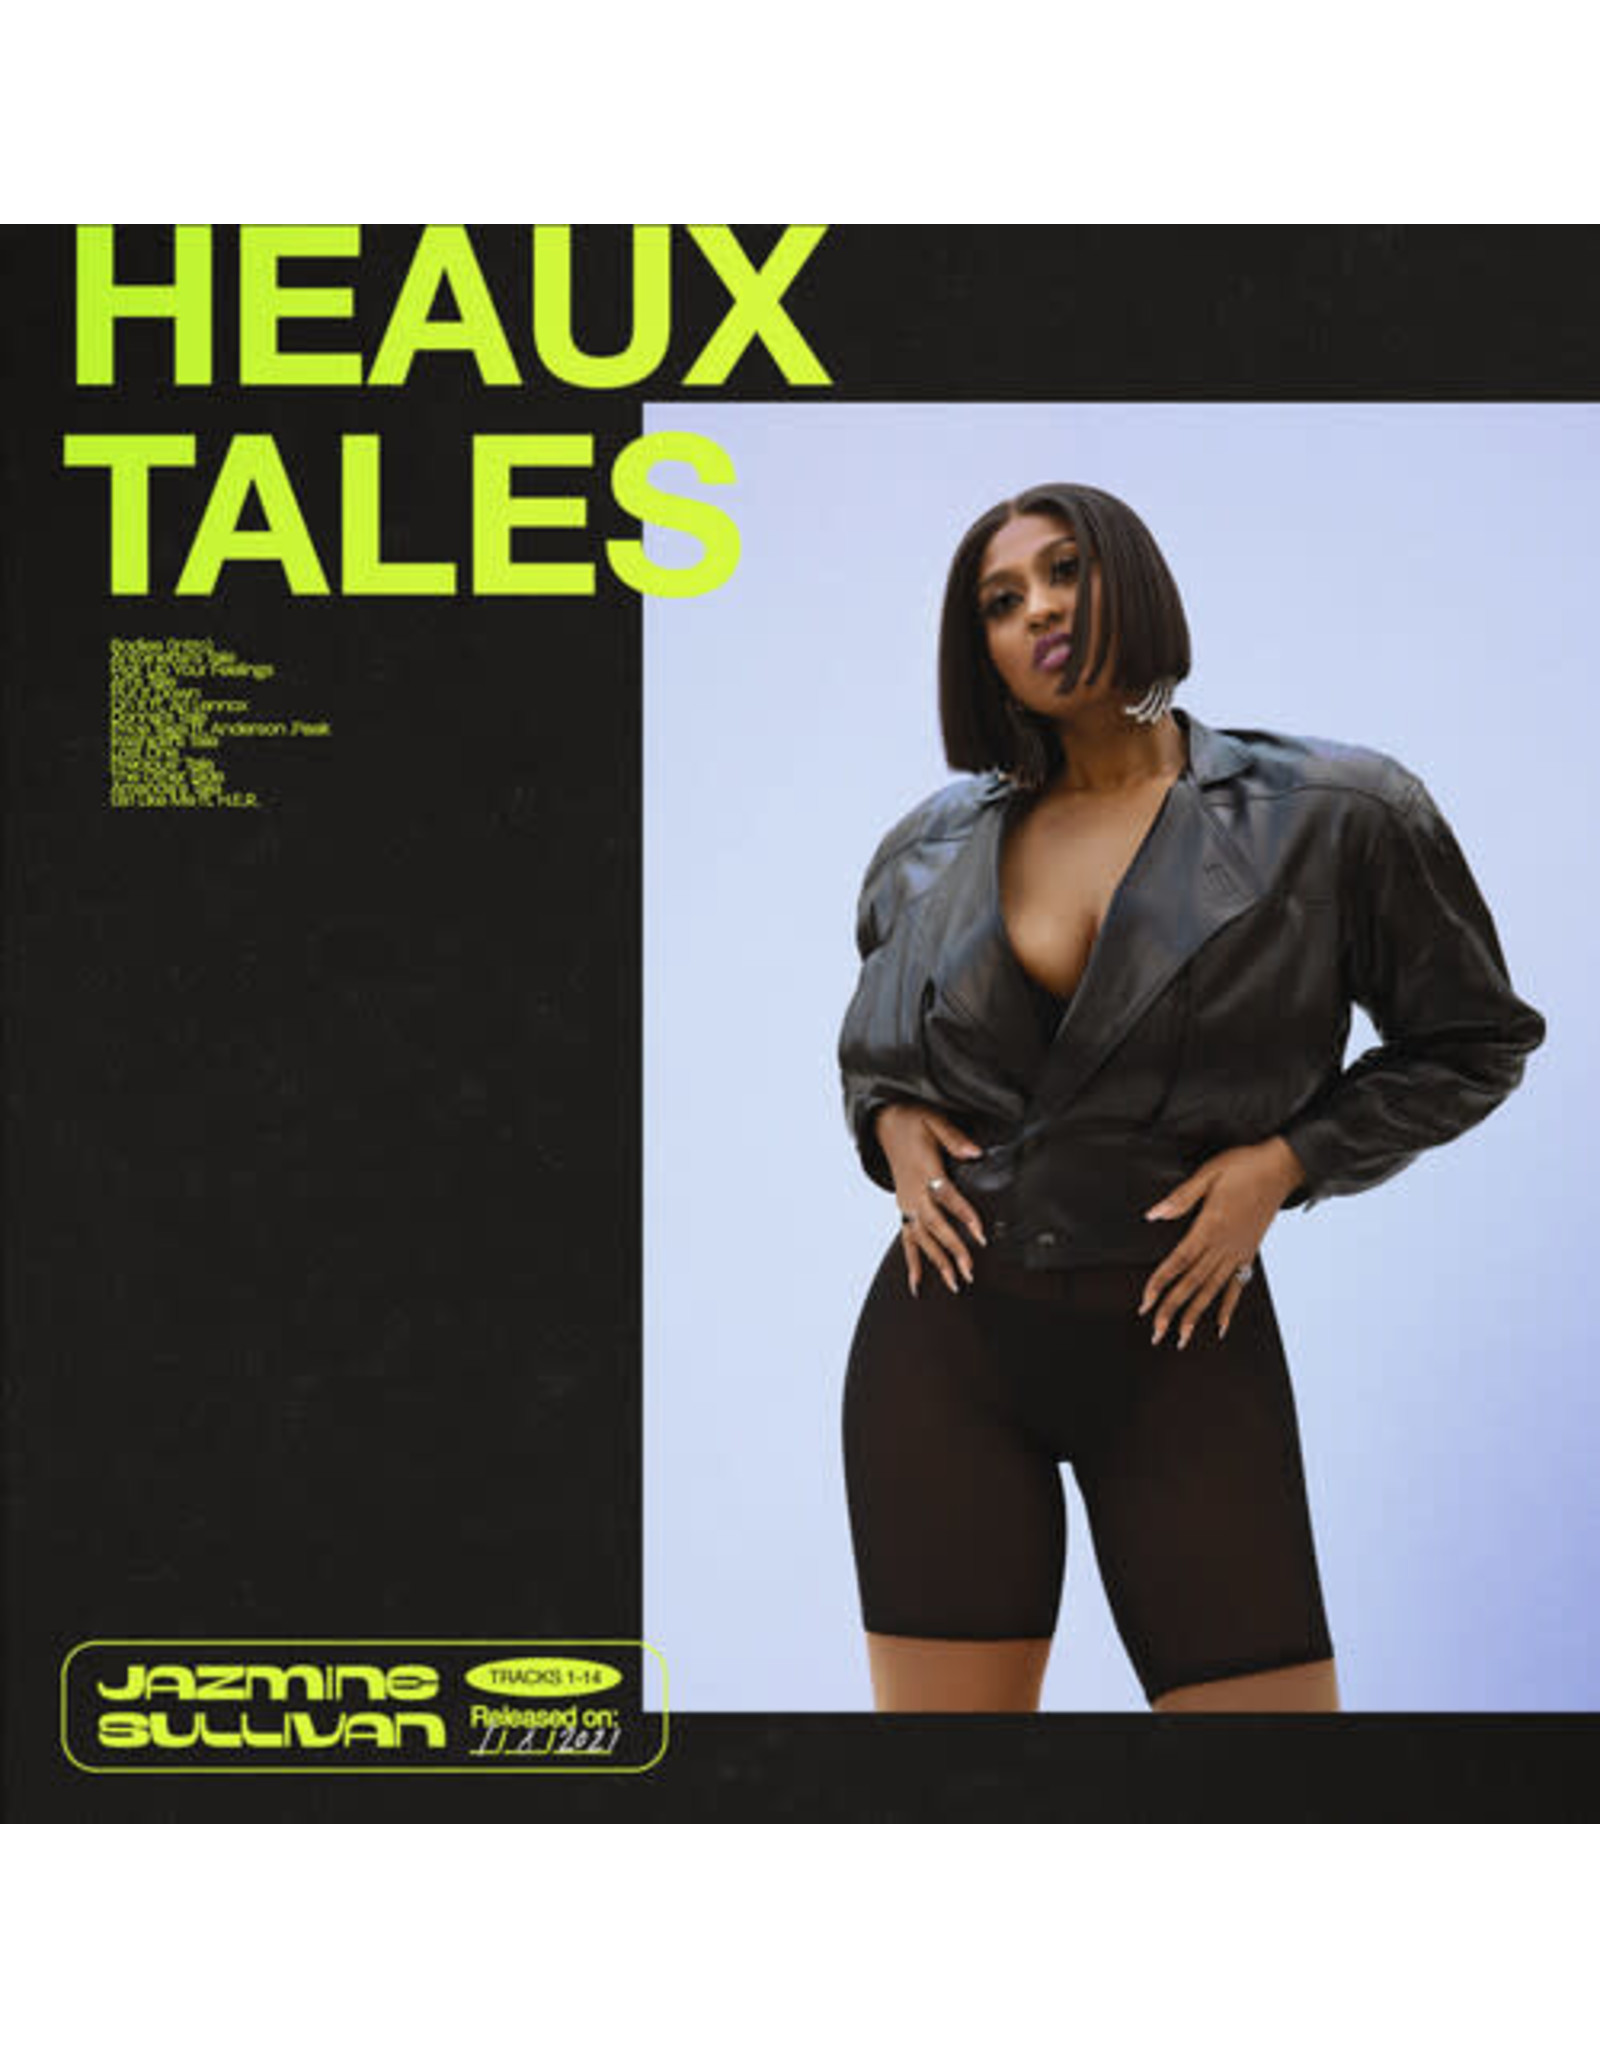 New Vinyl Jazmine Sullivan - Heaux Tales (150g) LP